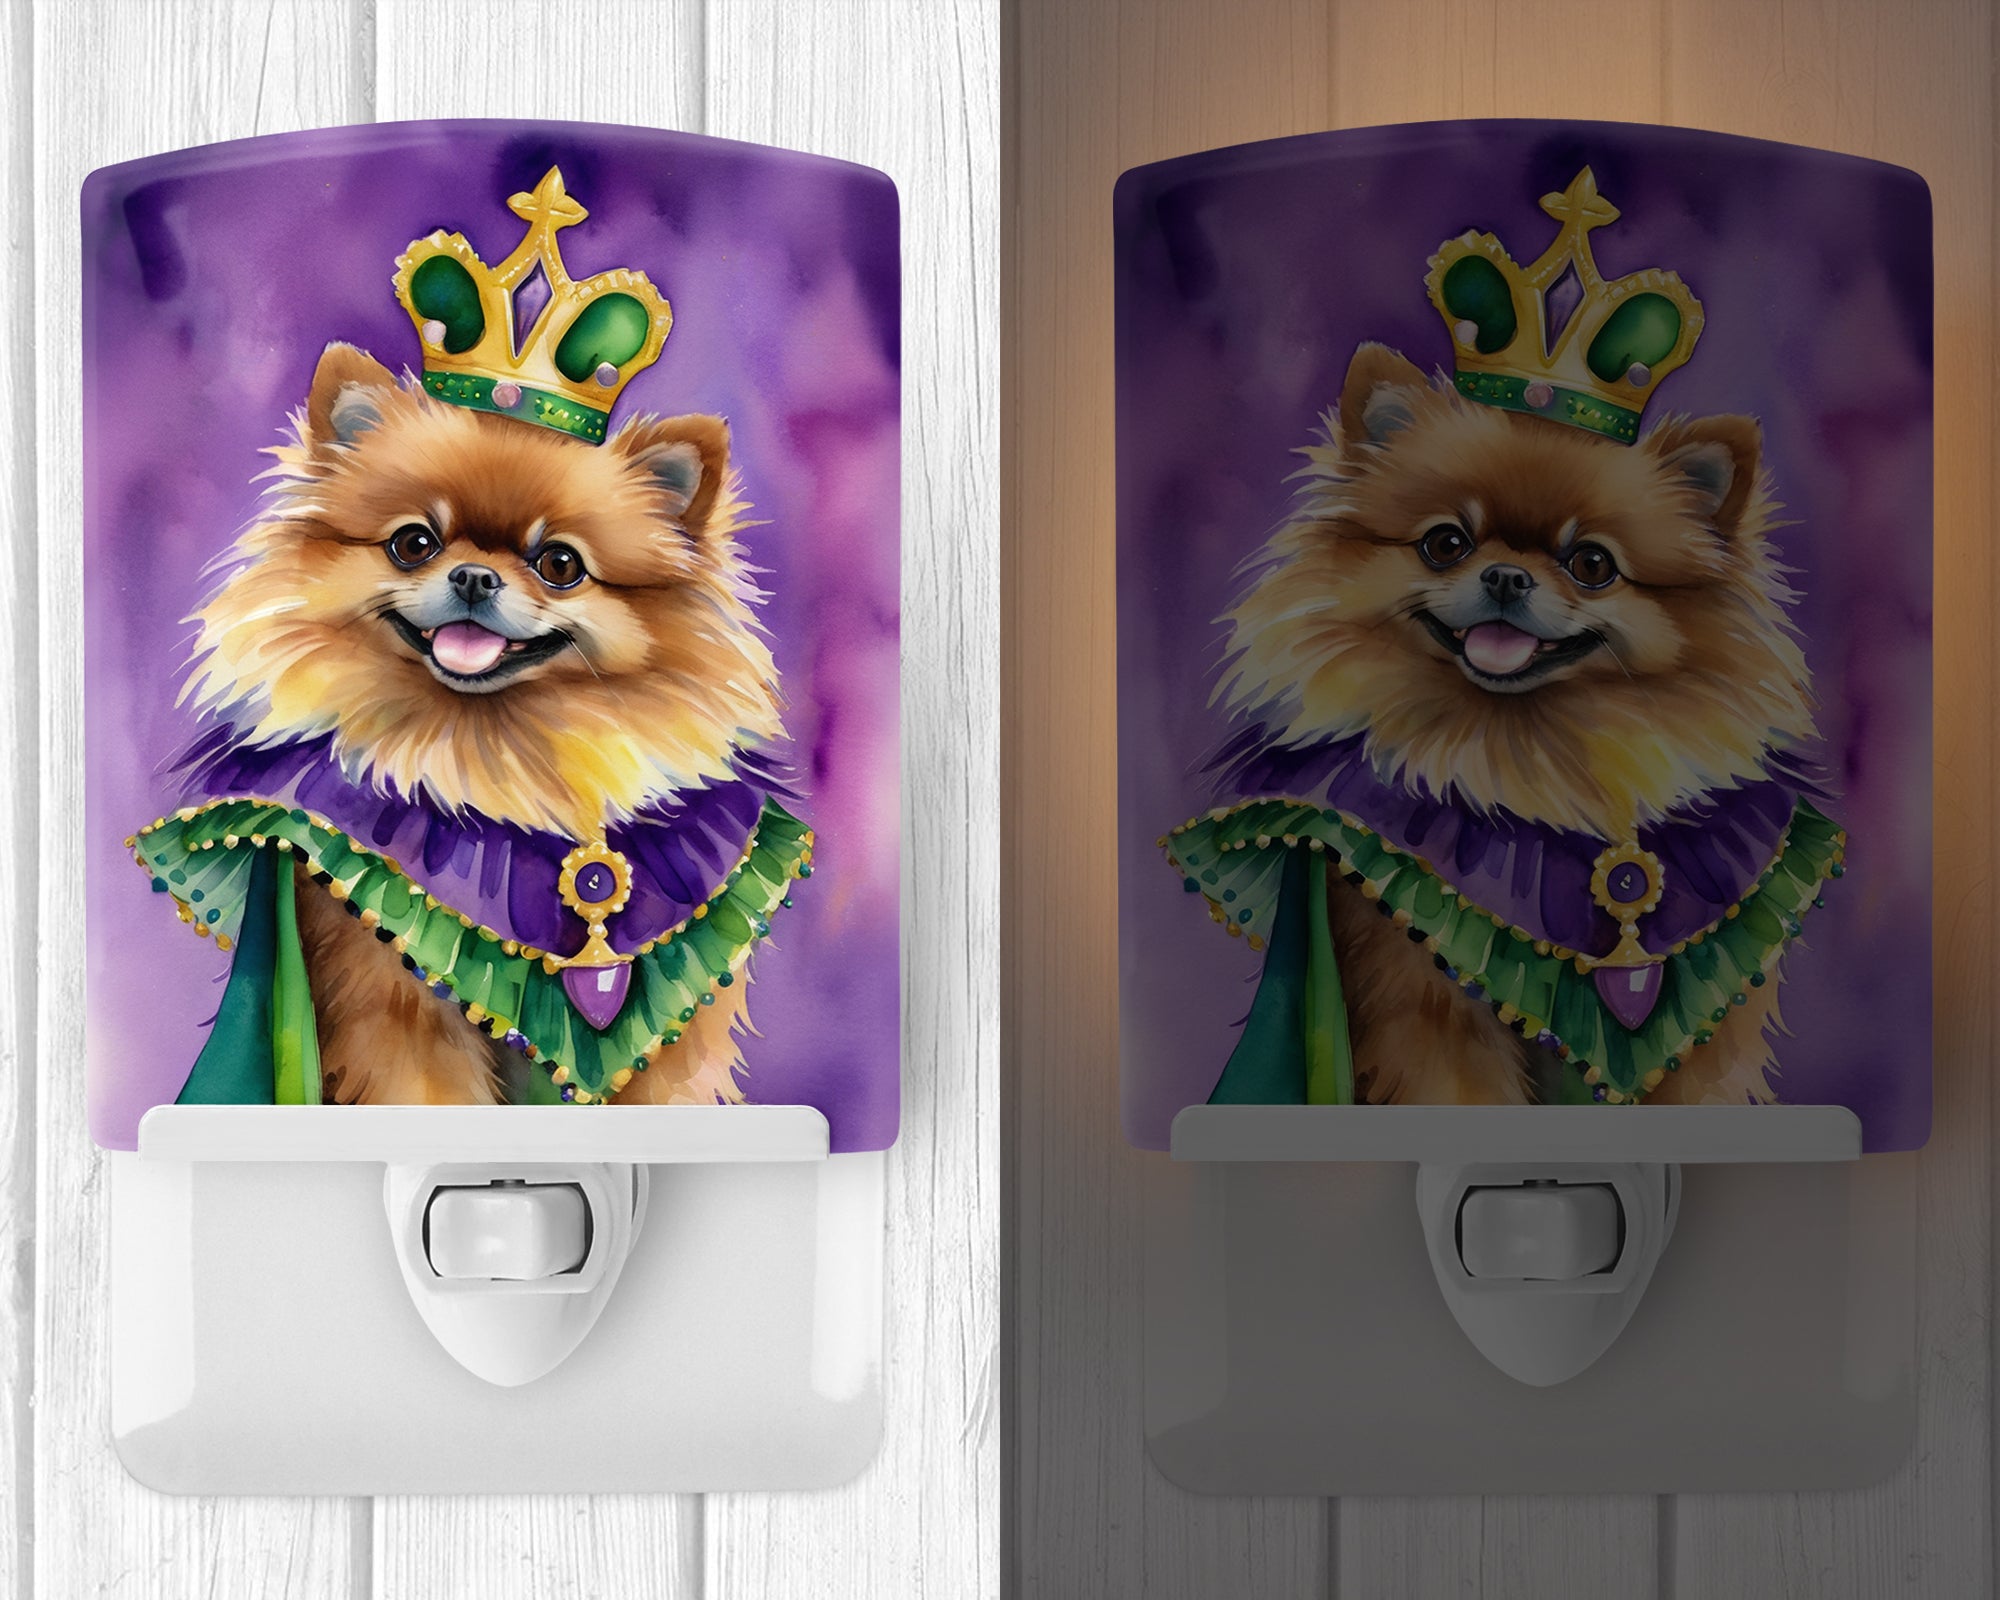 Buy this Pomeranian King of Mardi Gras Ceramic Night Light